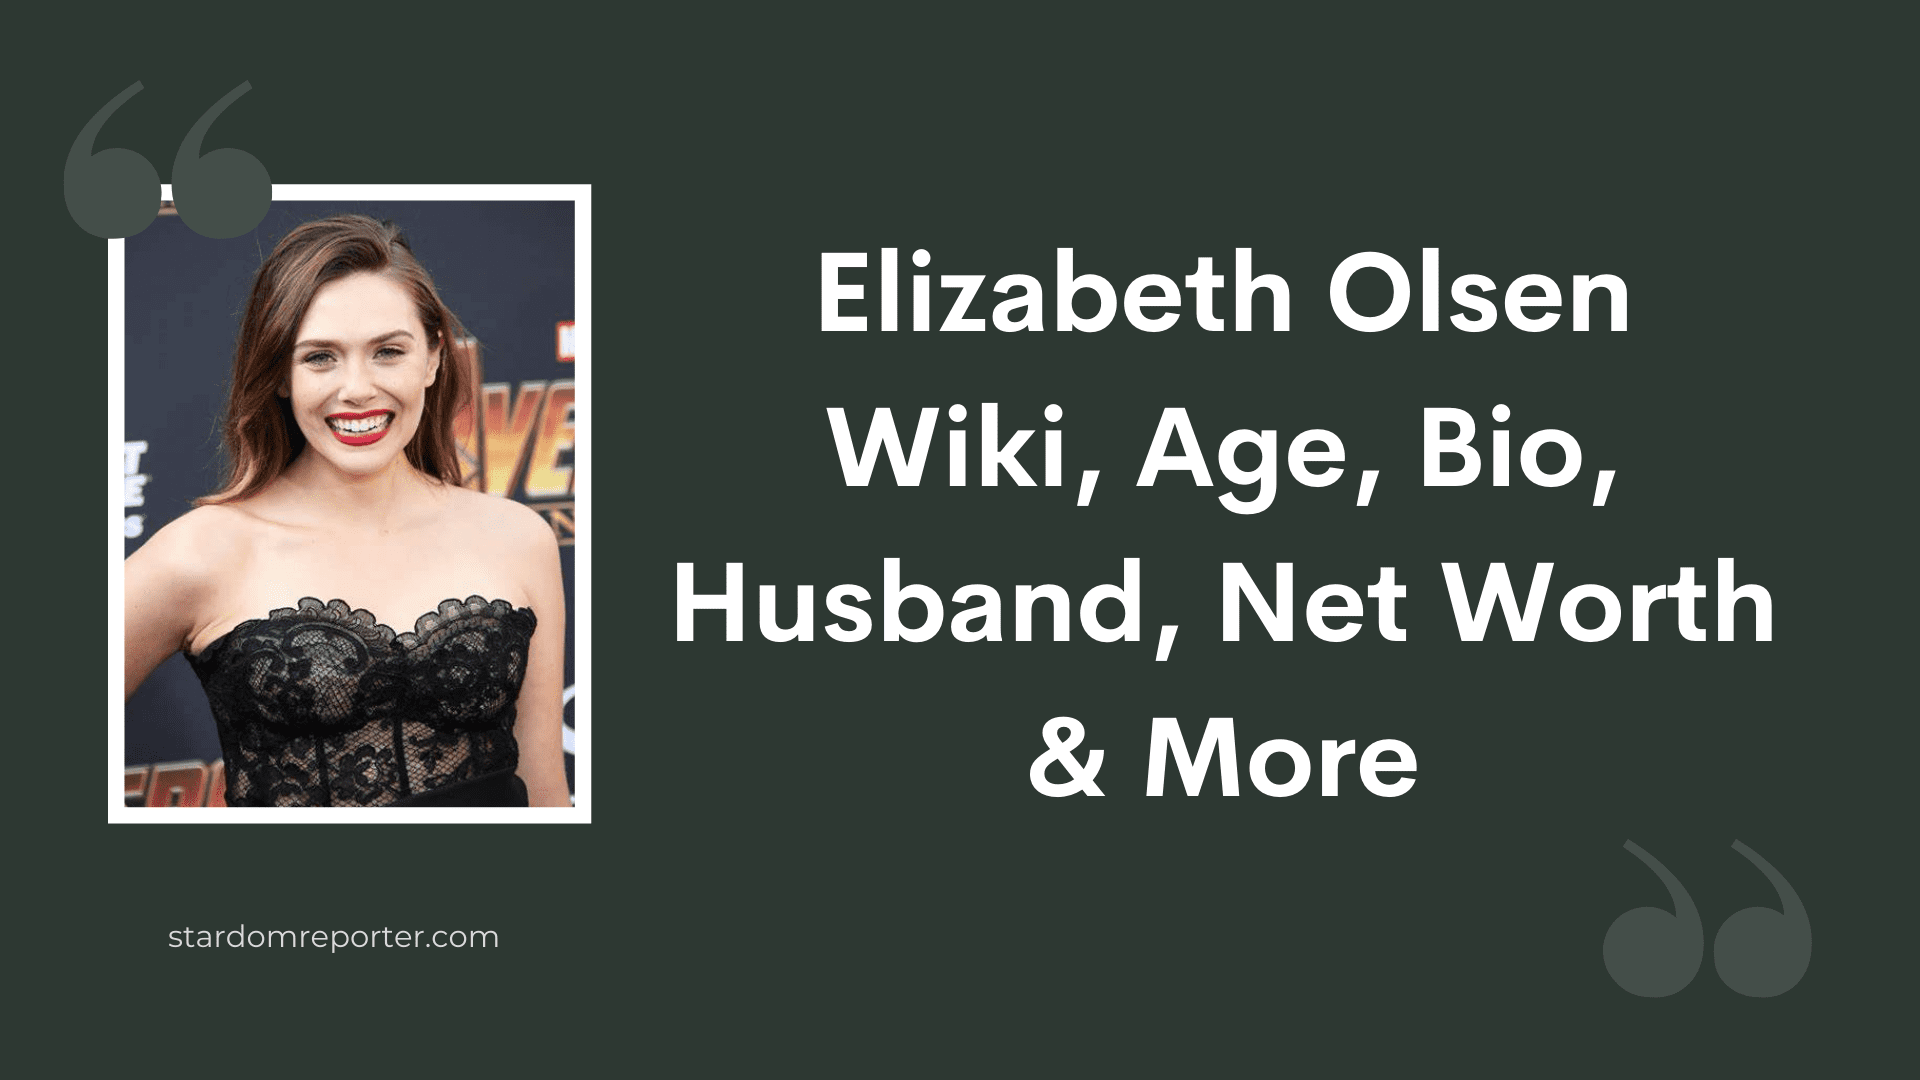 Elizabeth Olsen Wiki, Age, Bio, Husband, Net Worth & More - 11